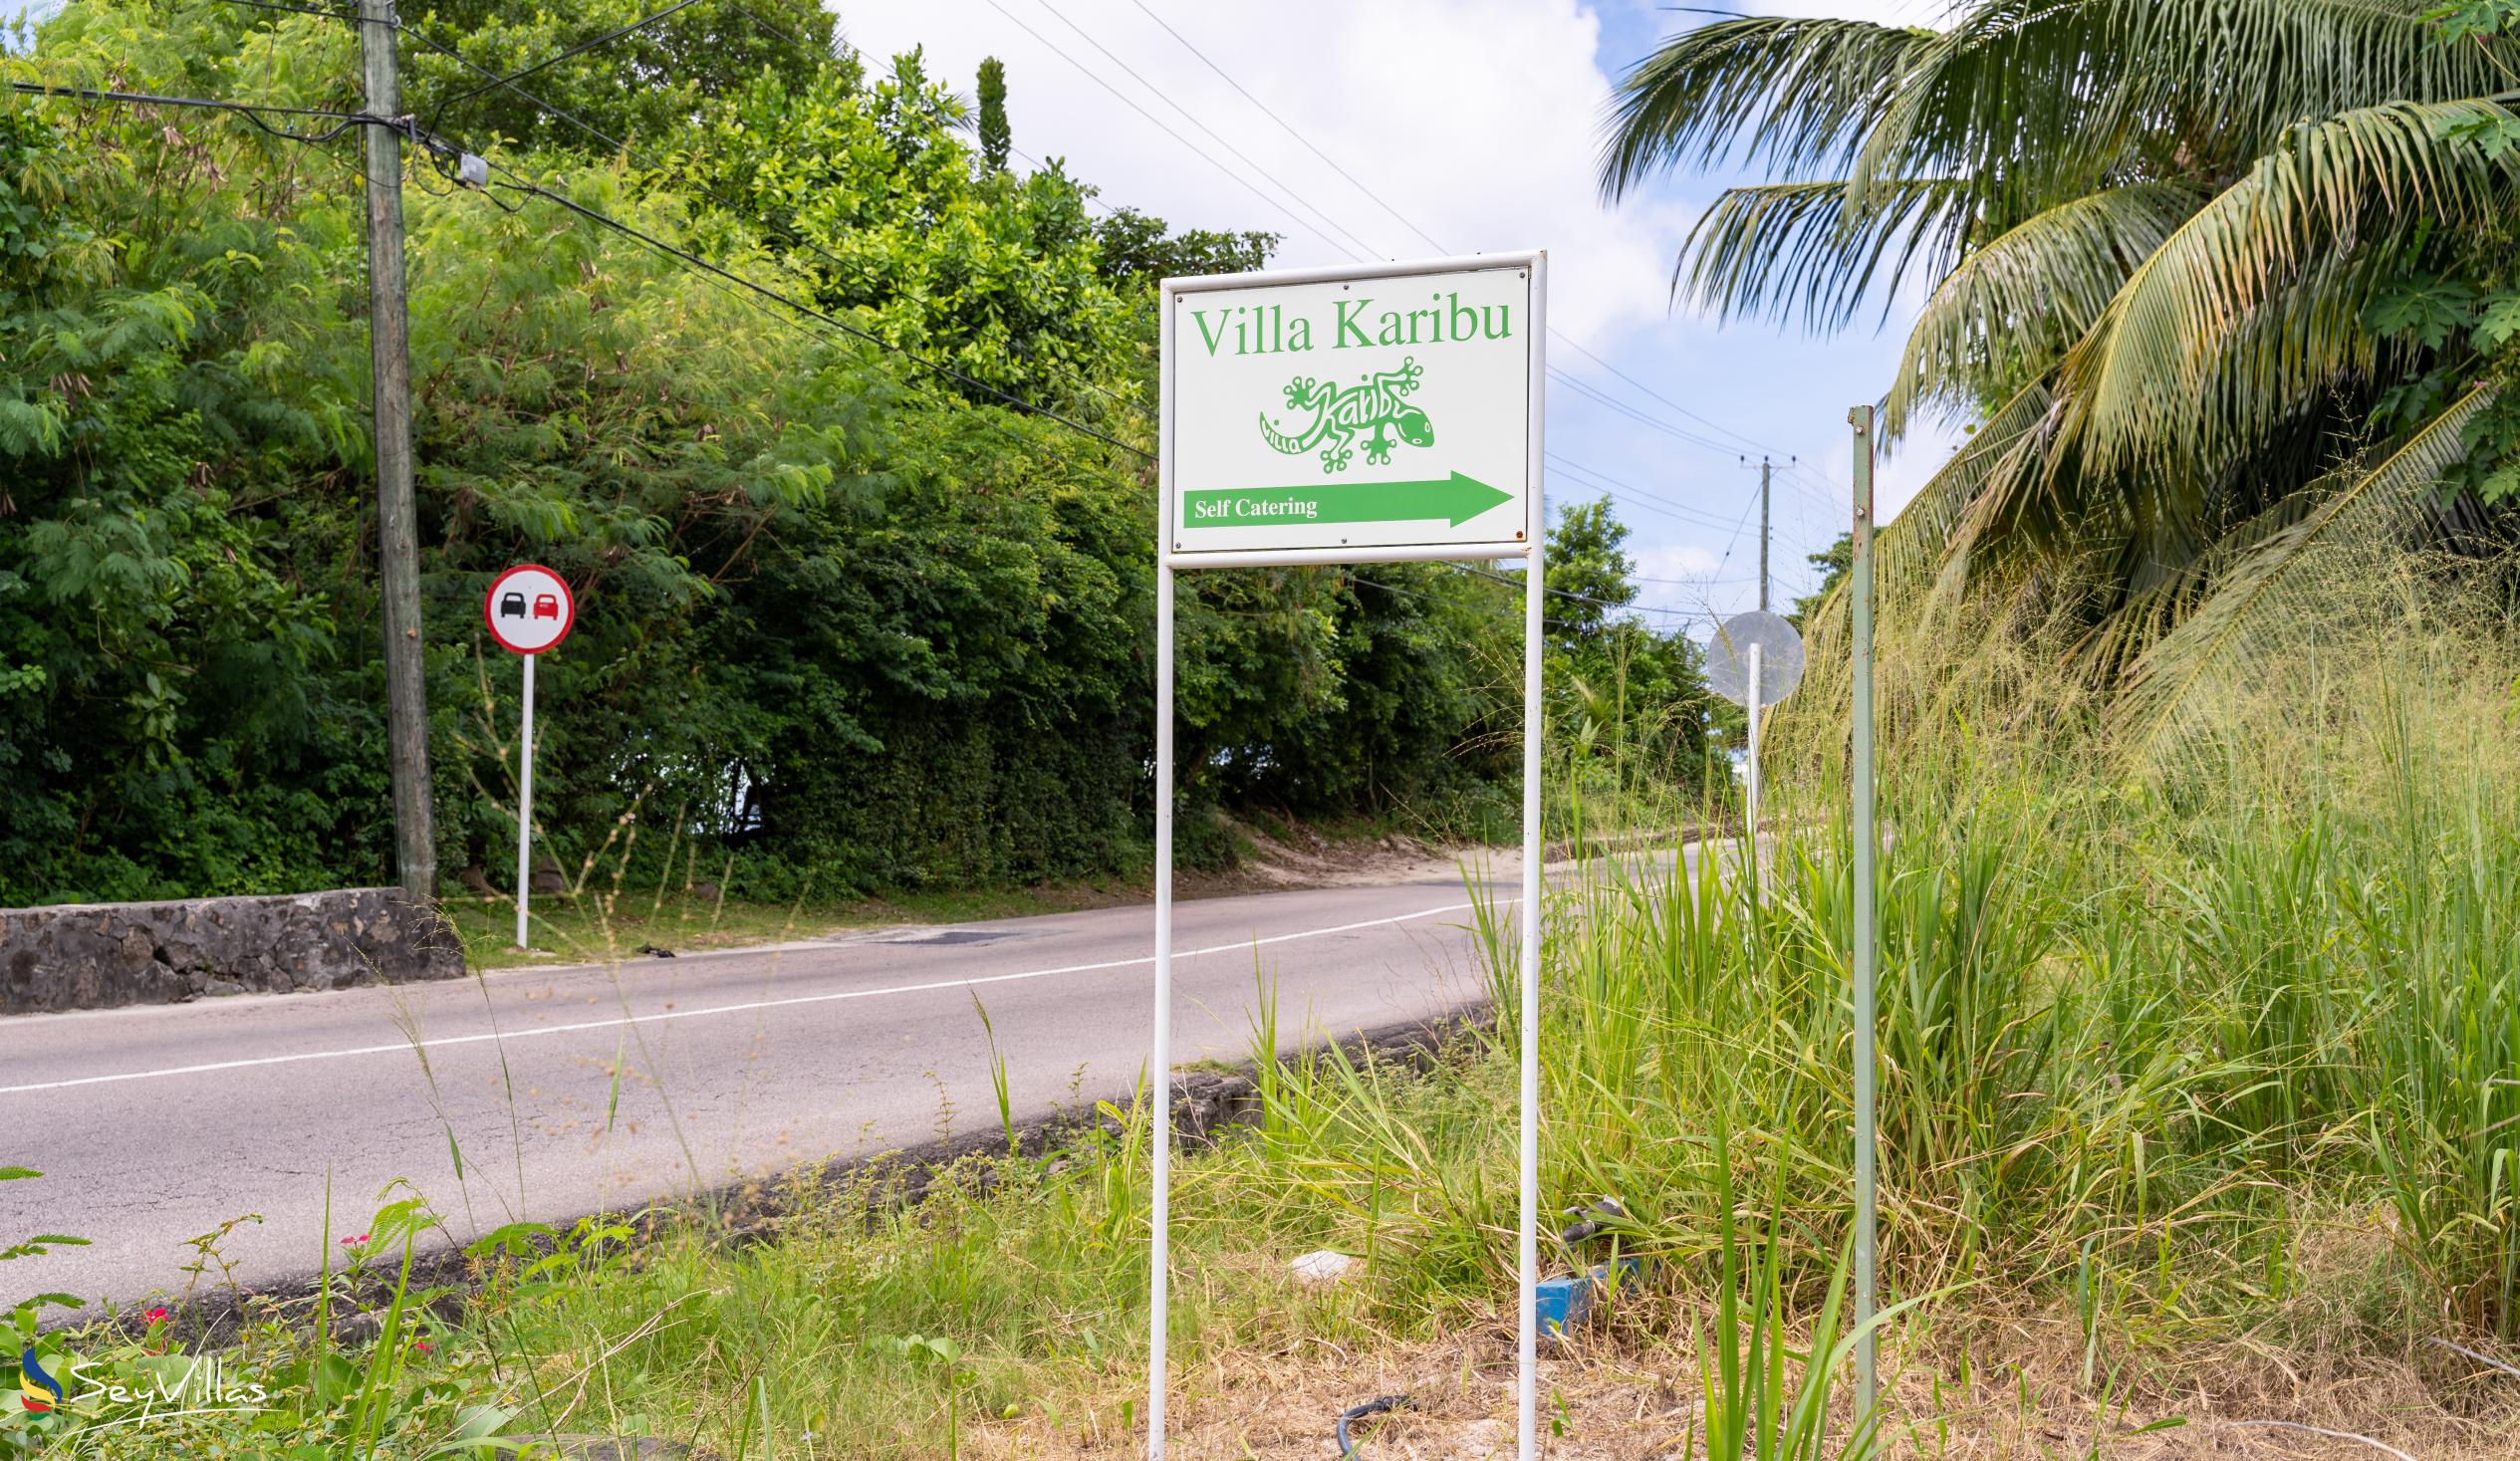 Foto 20: Villa Karibu - Posizione - Mahé (Seychelles)